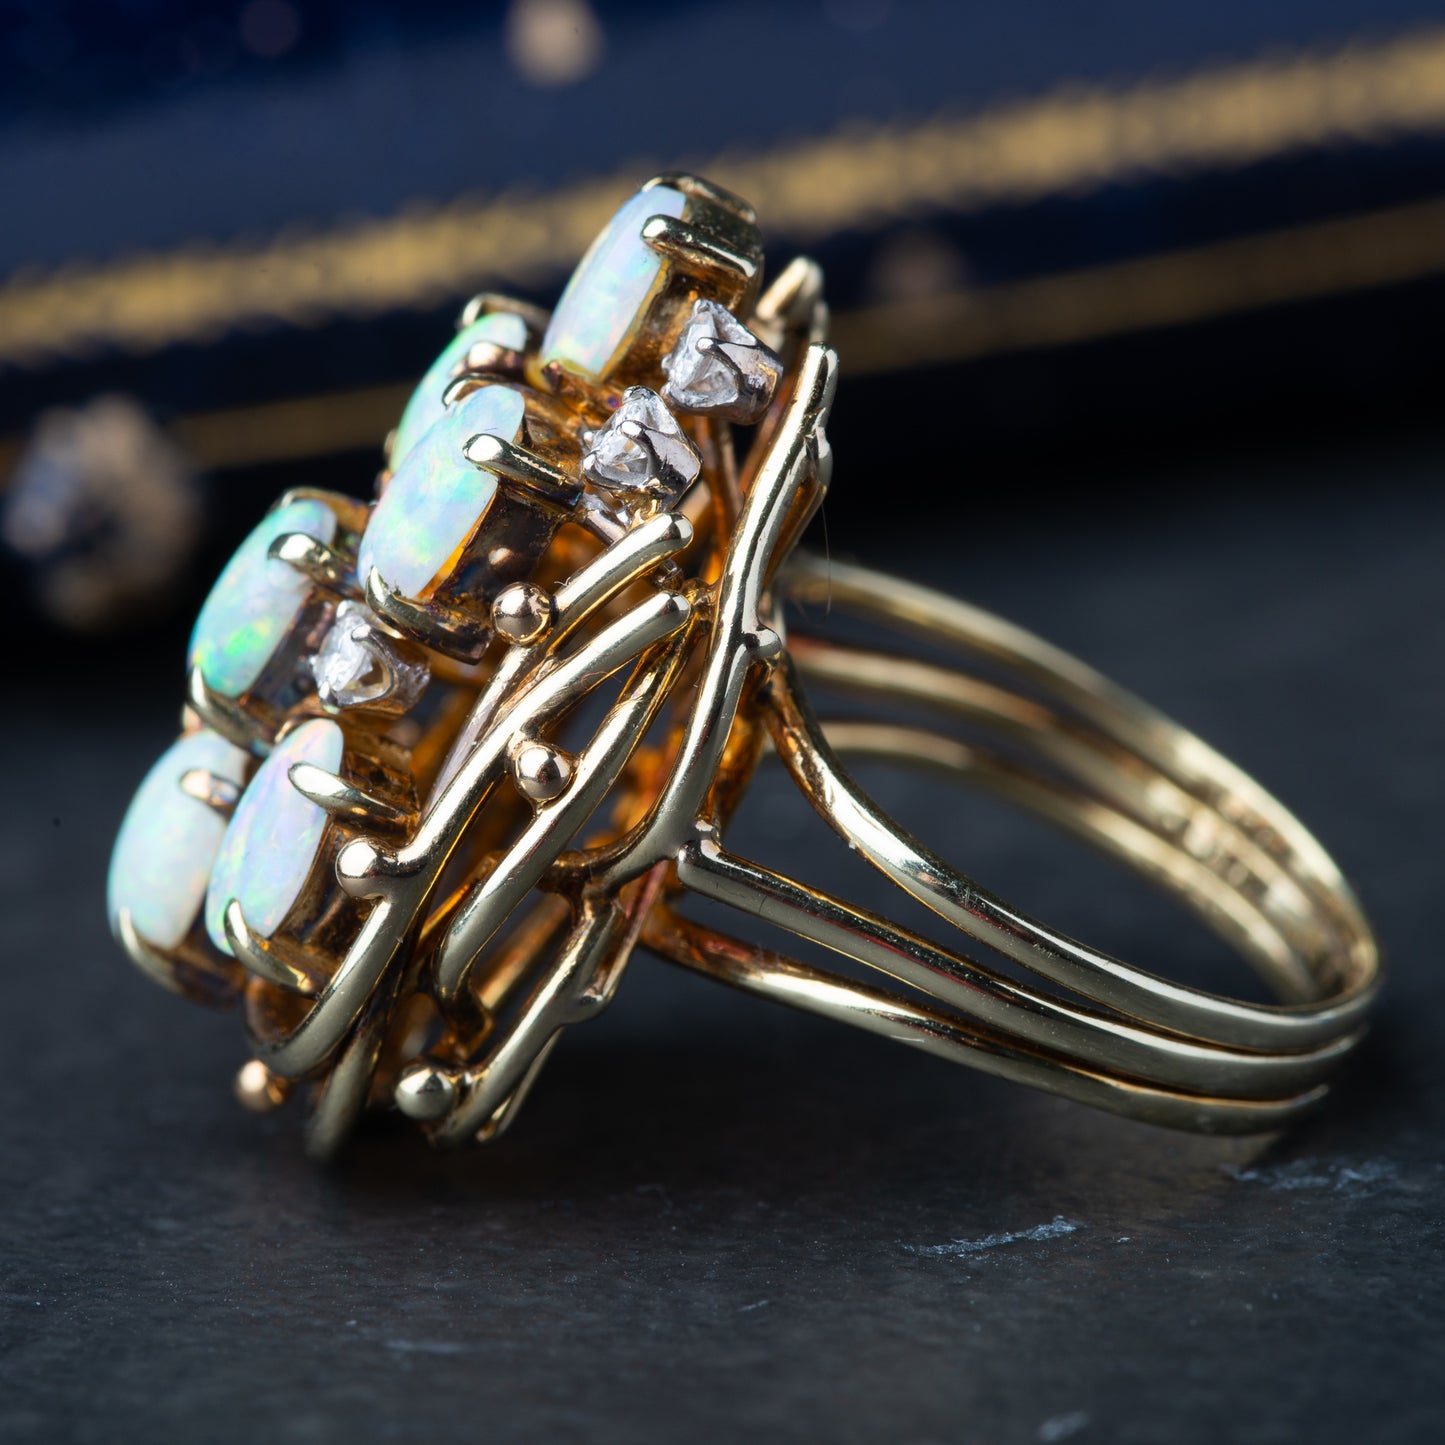 Vintage Brutalist 1960's Diamond Opal Ring